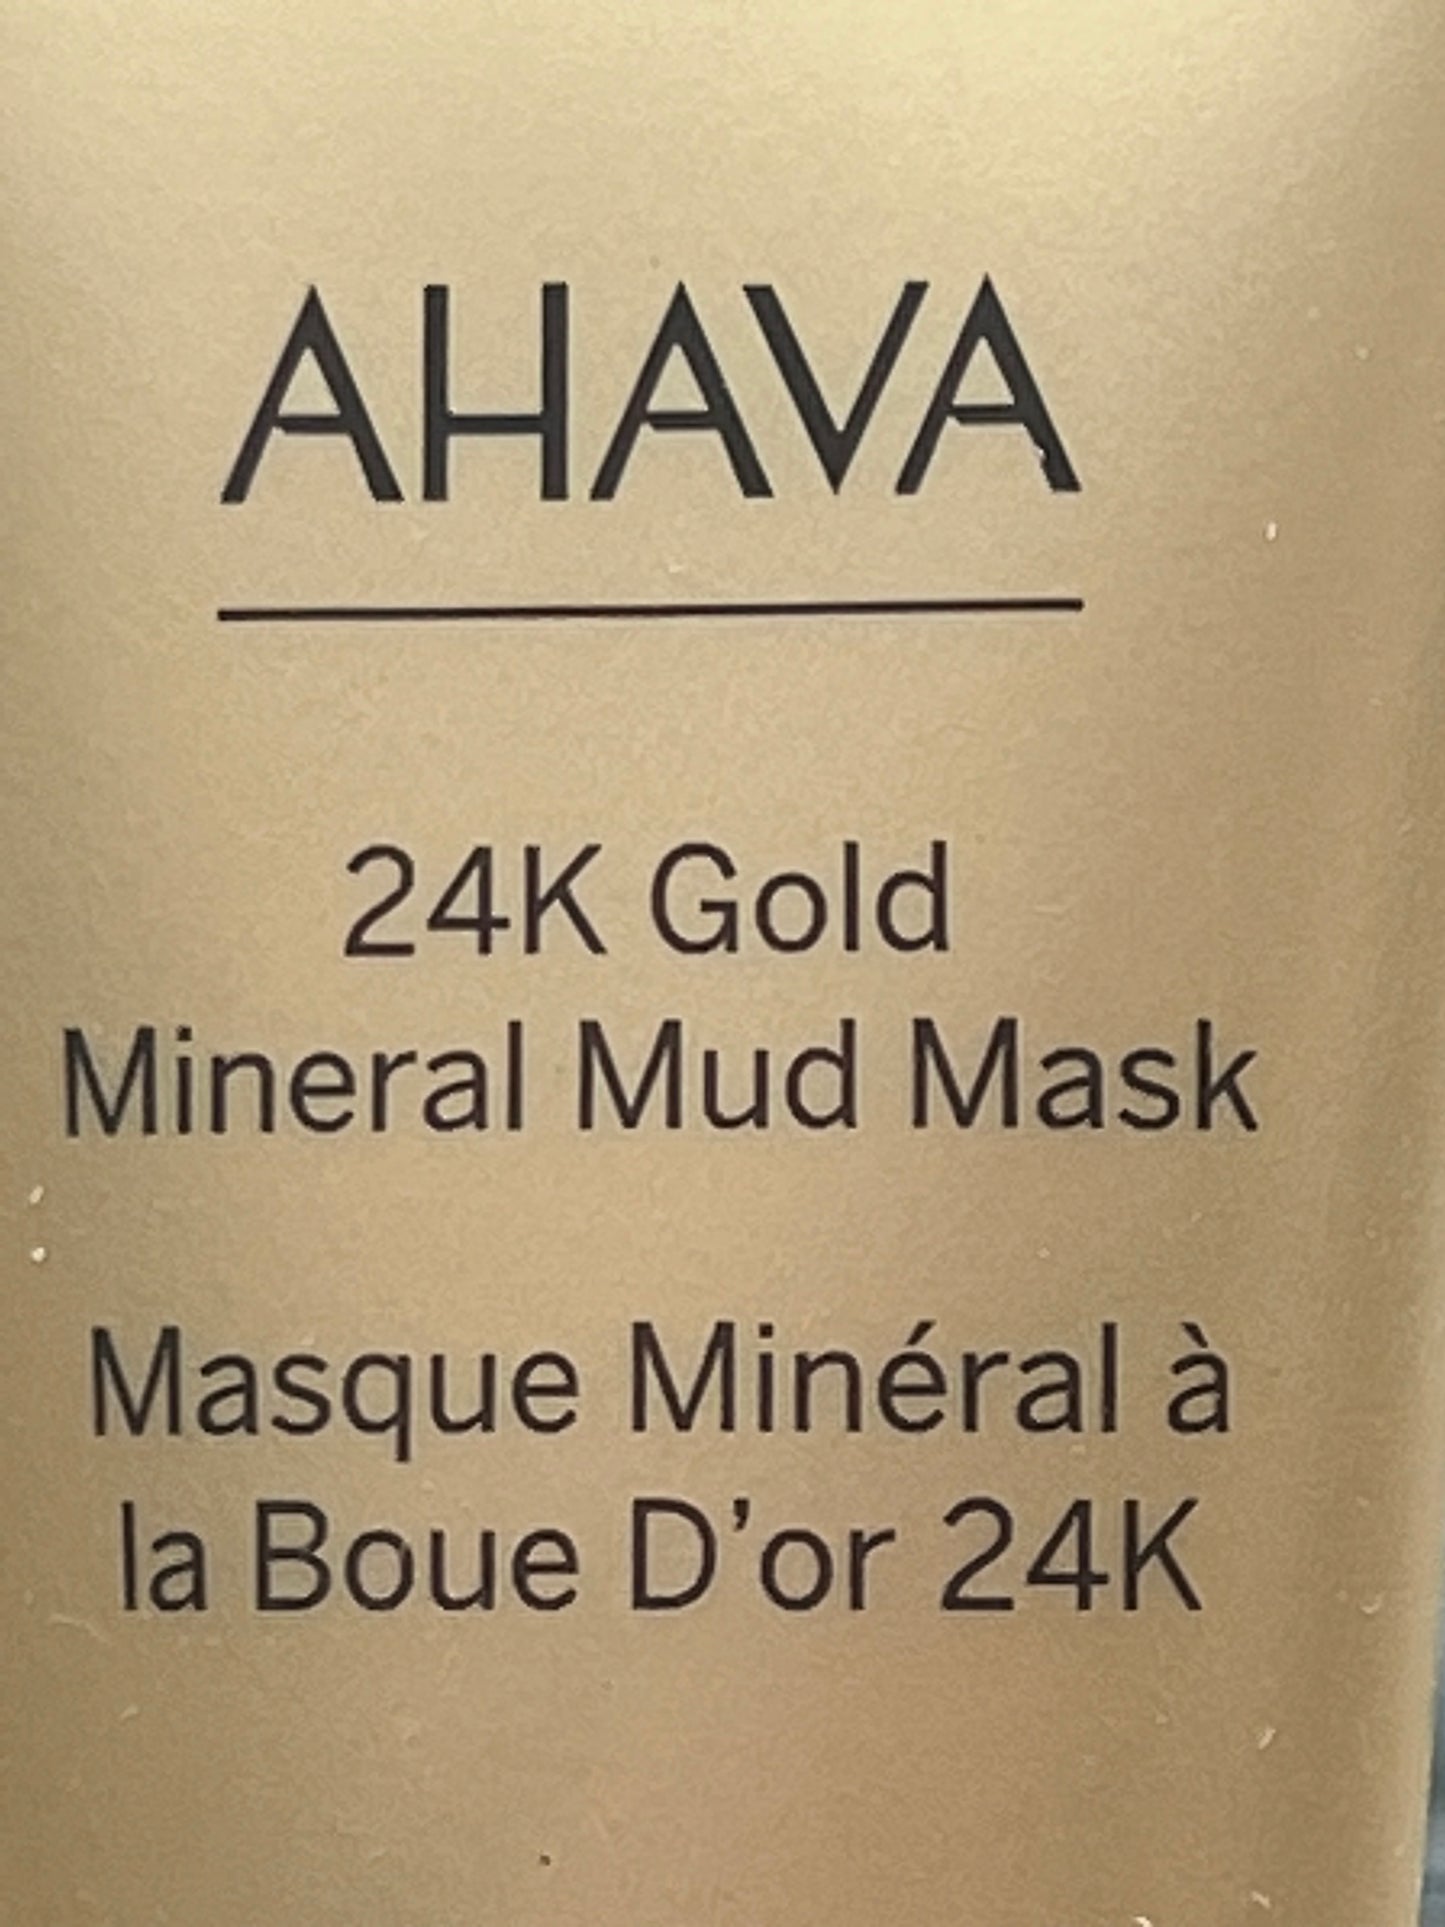 AHAVA 24k Gold Mineral Mud Mask